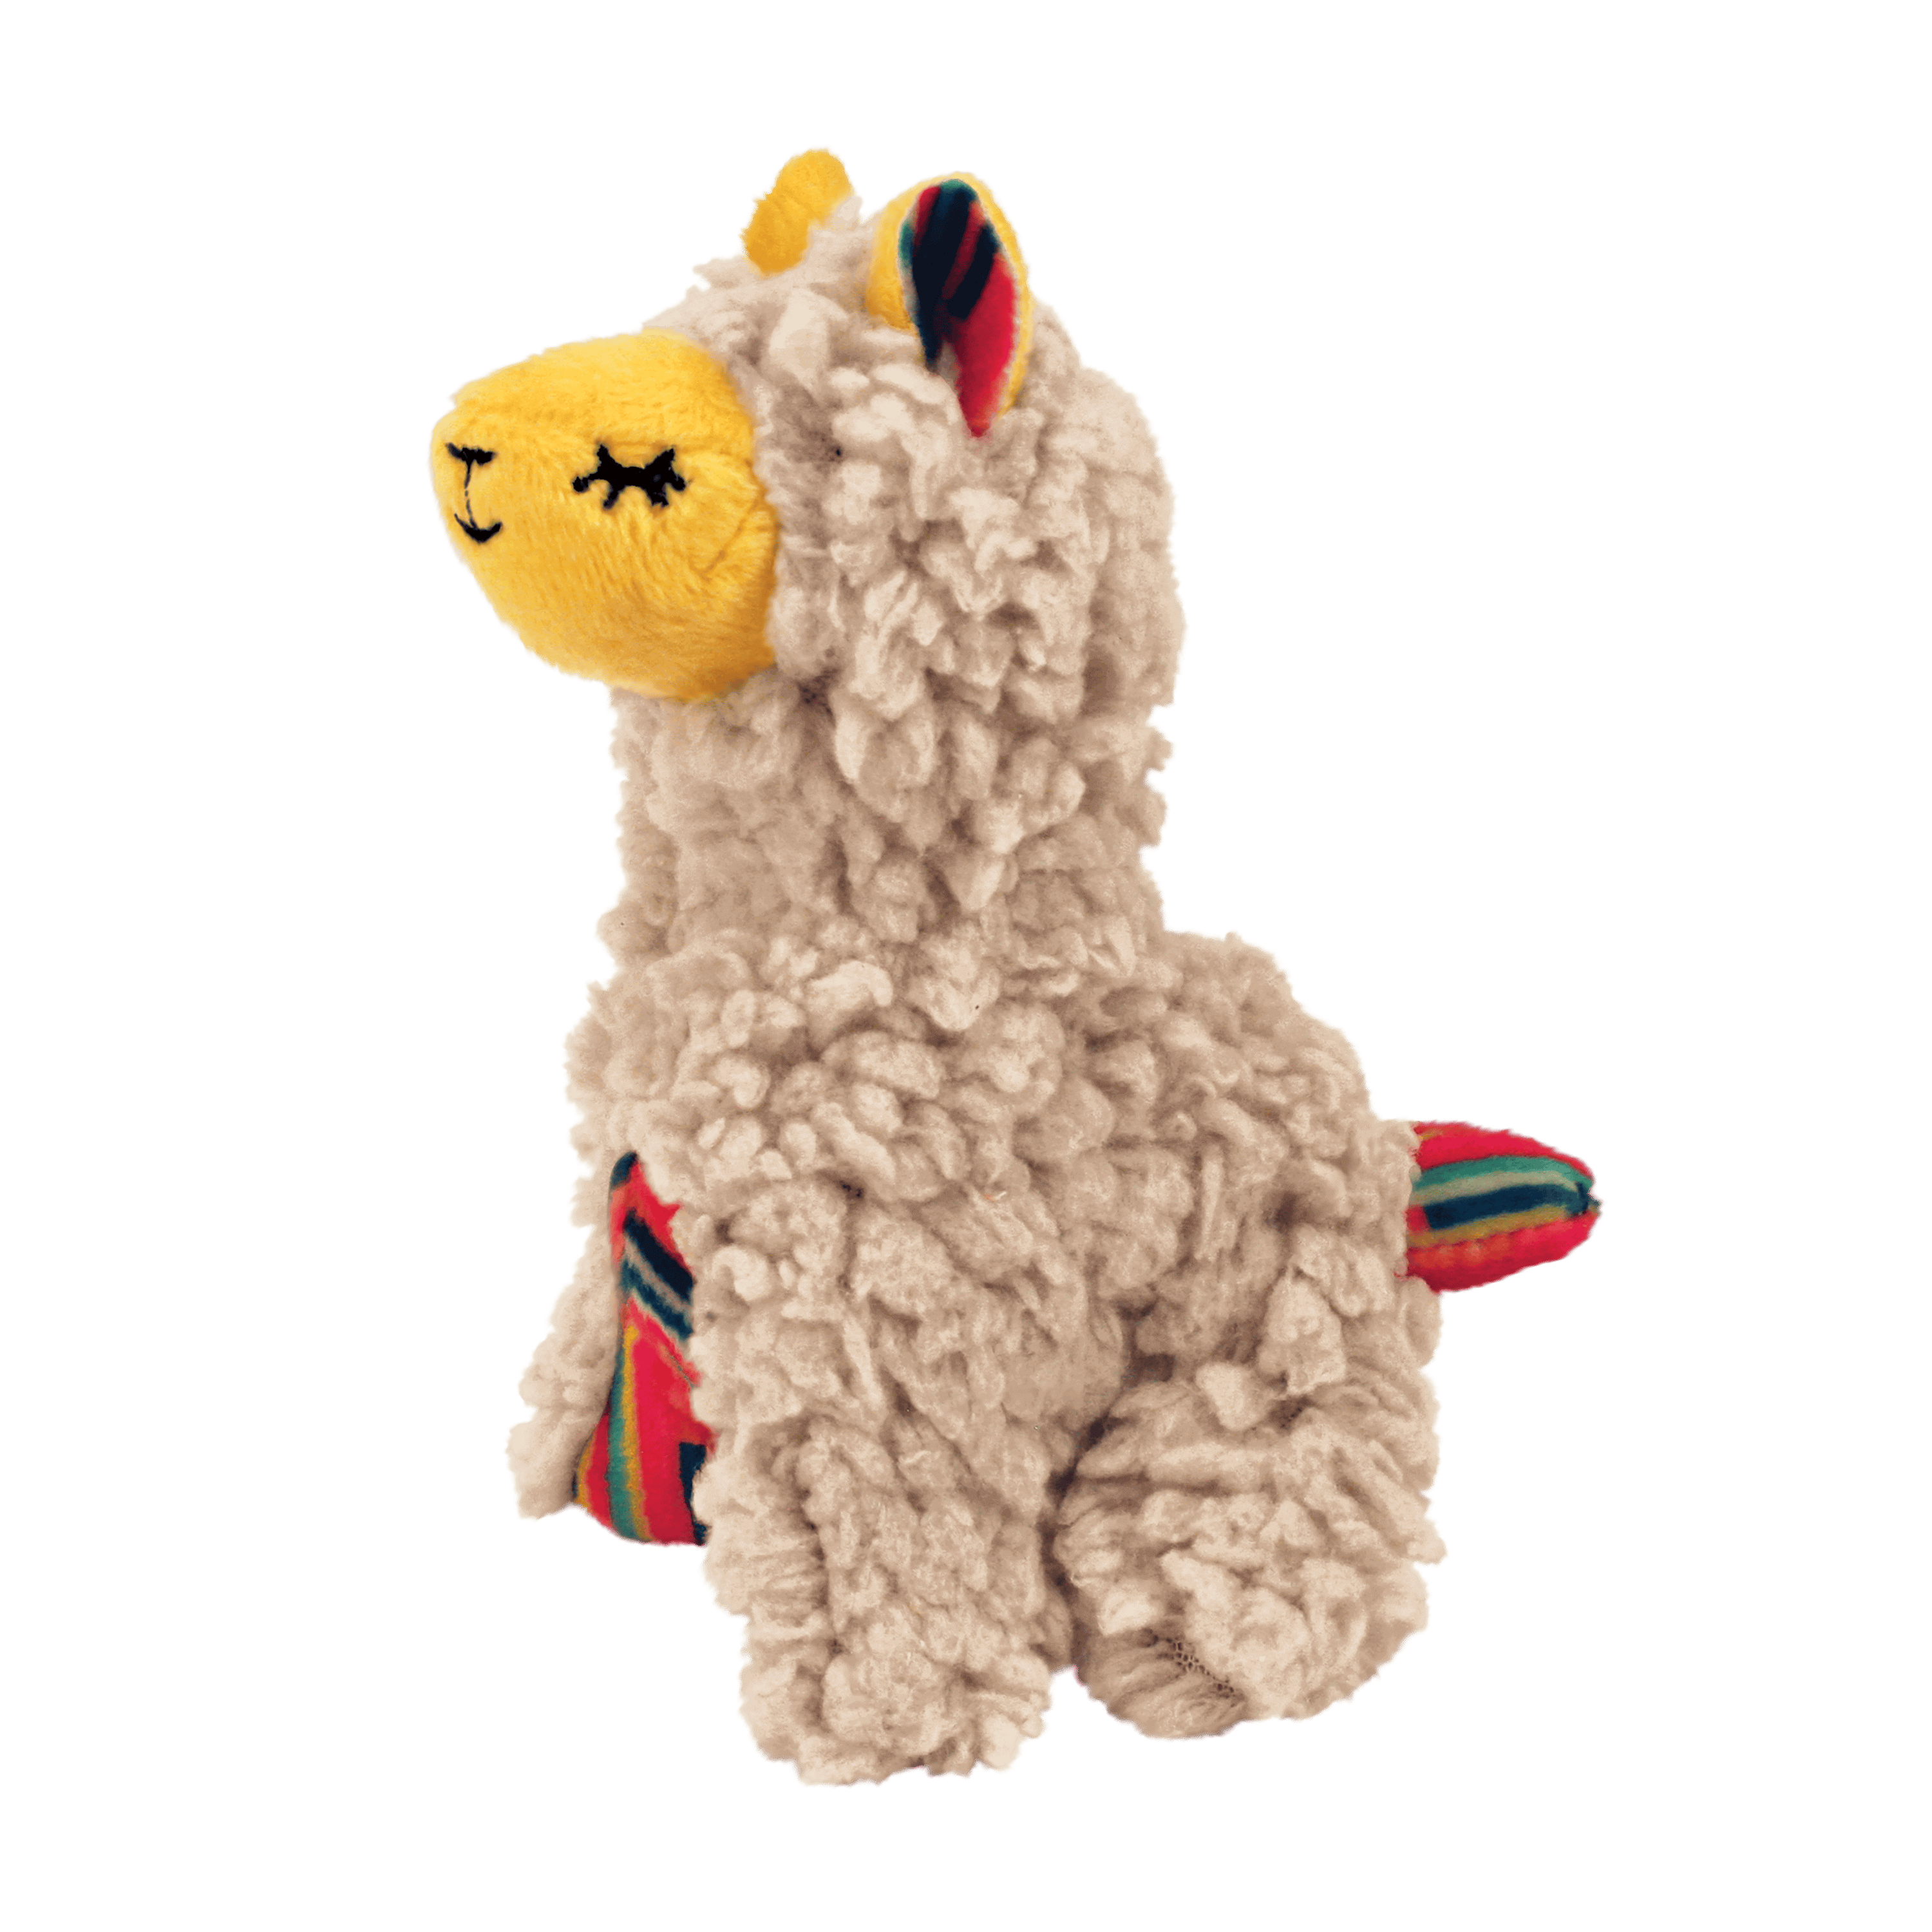 KONG - Softies Buzzy Llama (For Cats)